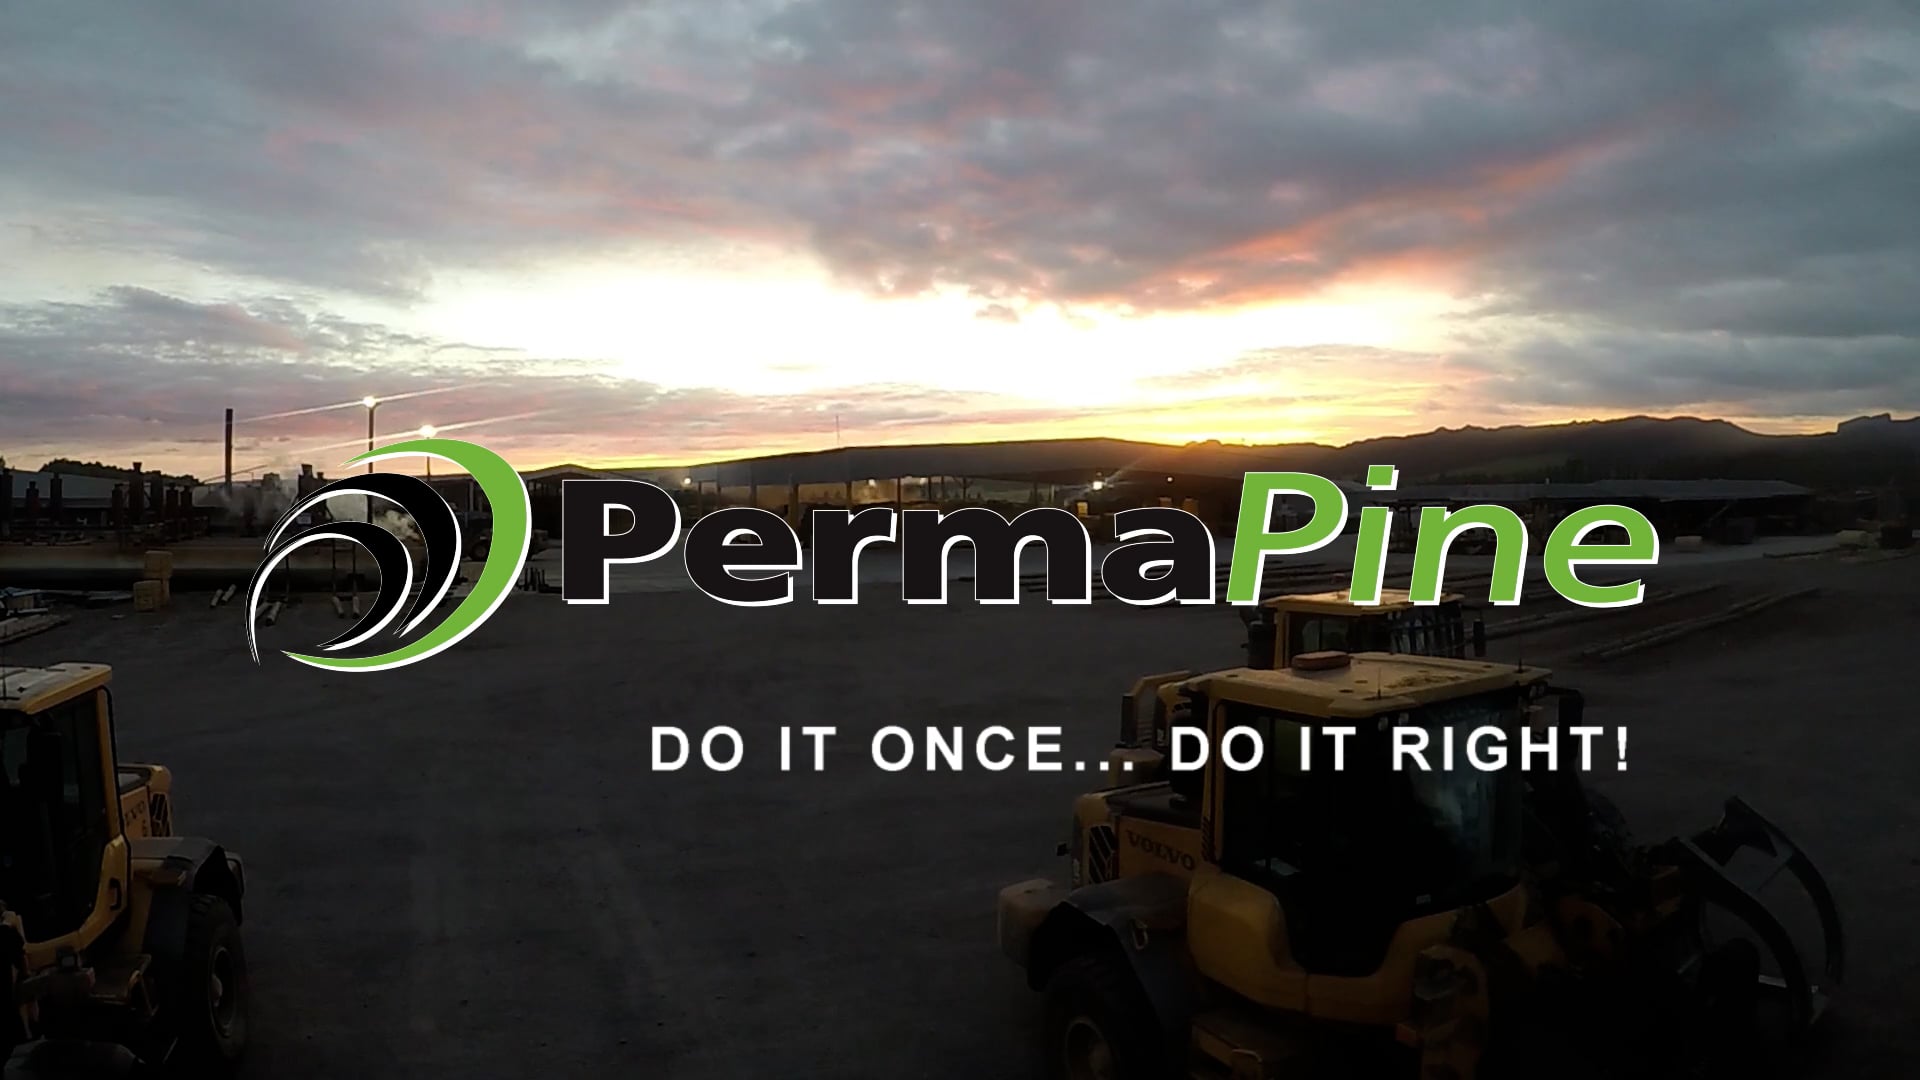 PermaPine Safety Video 2020